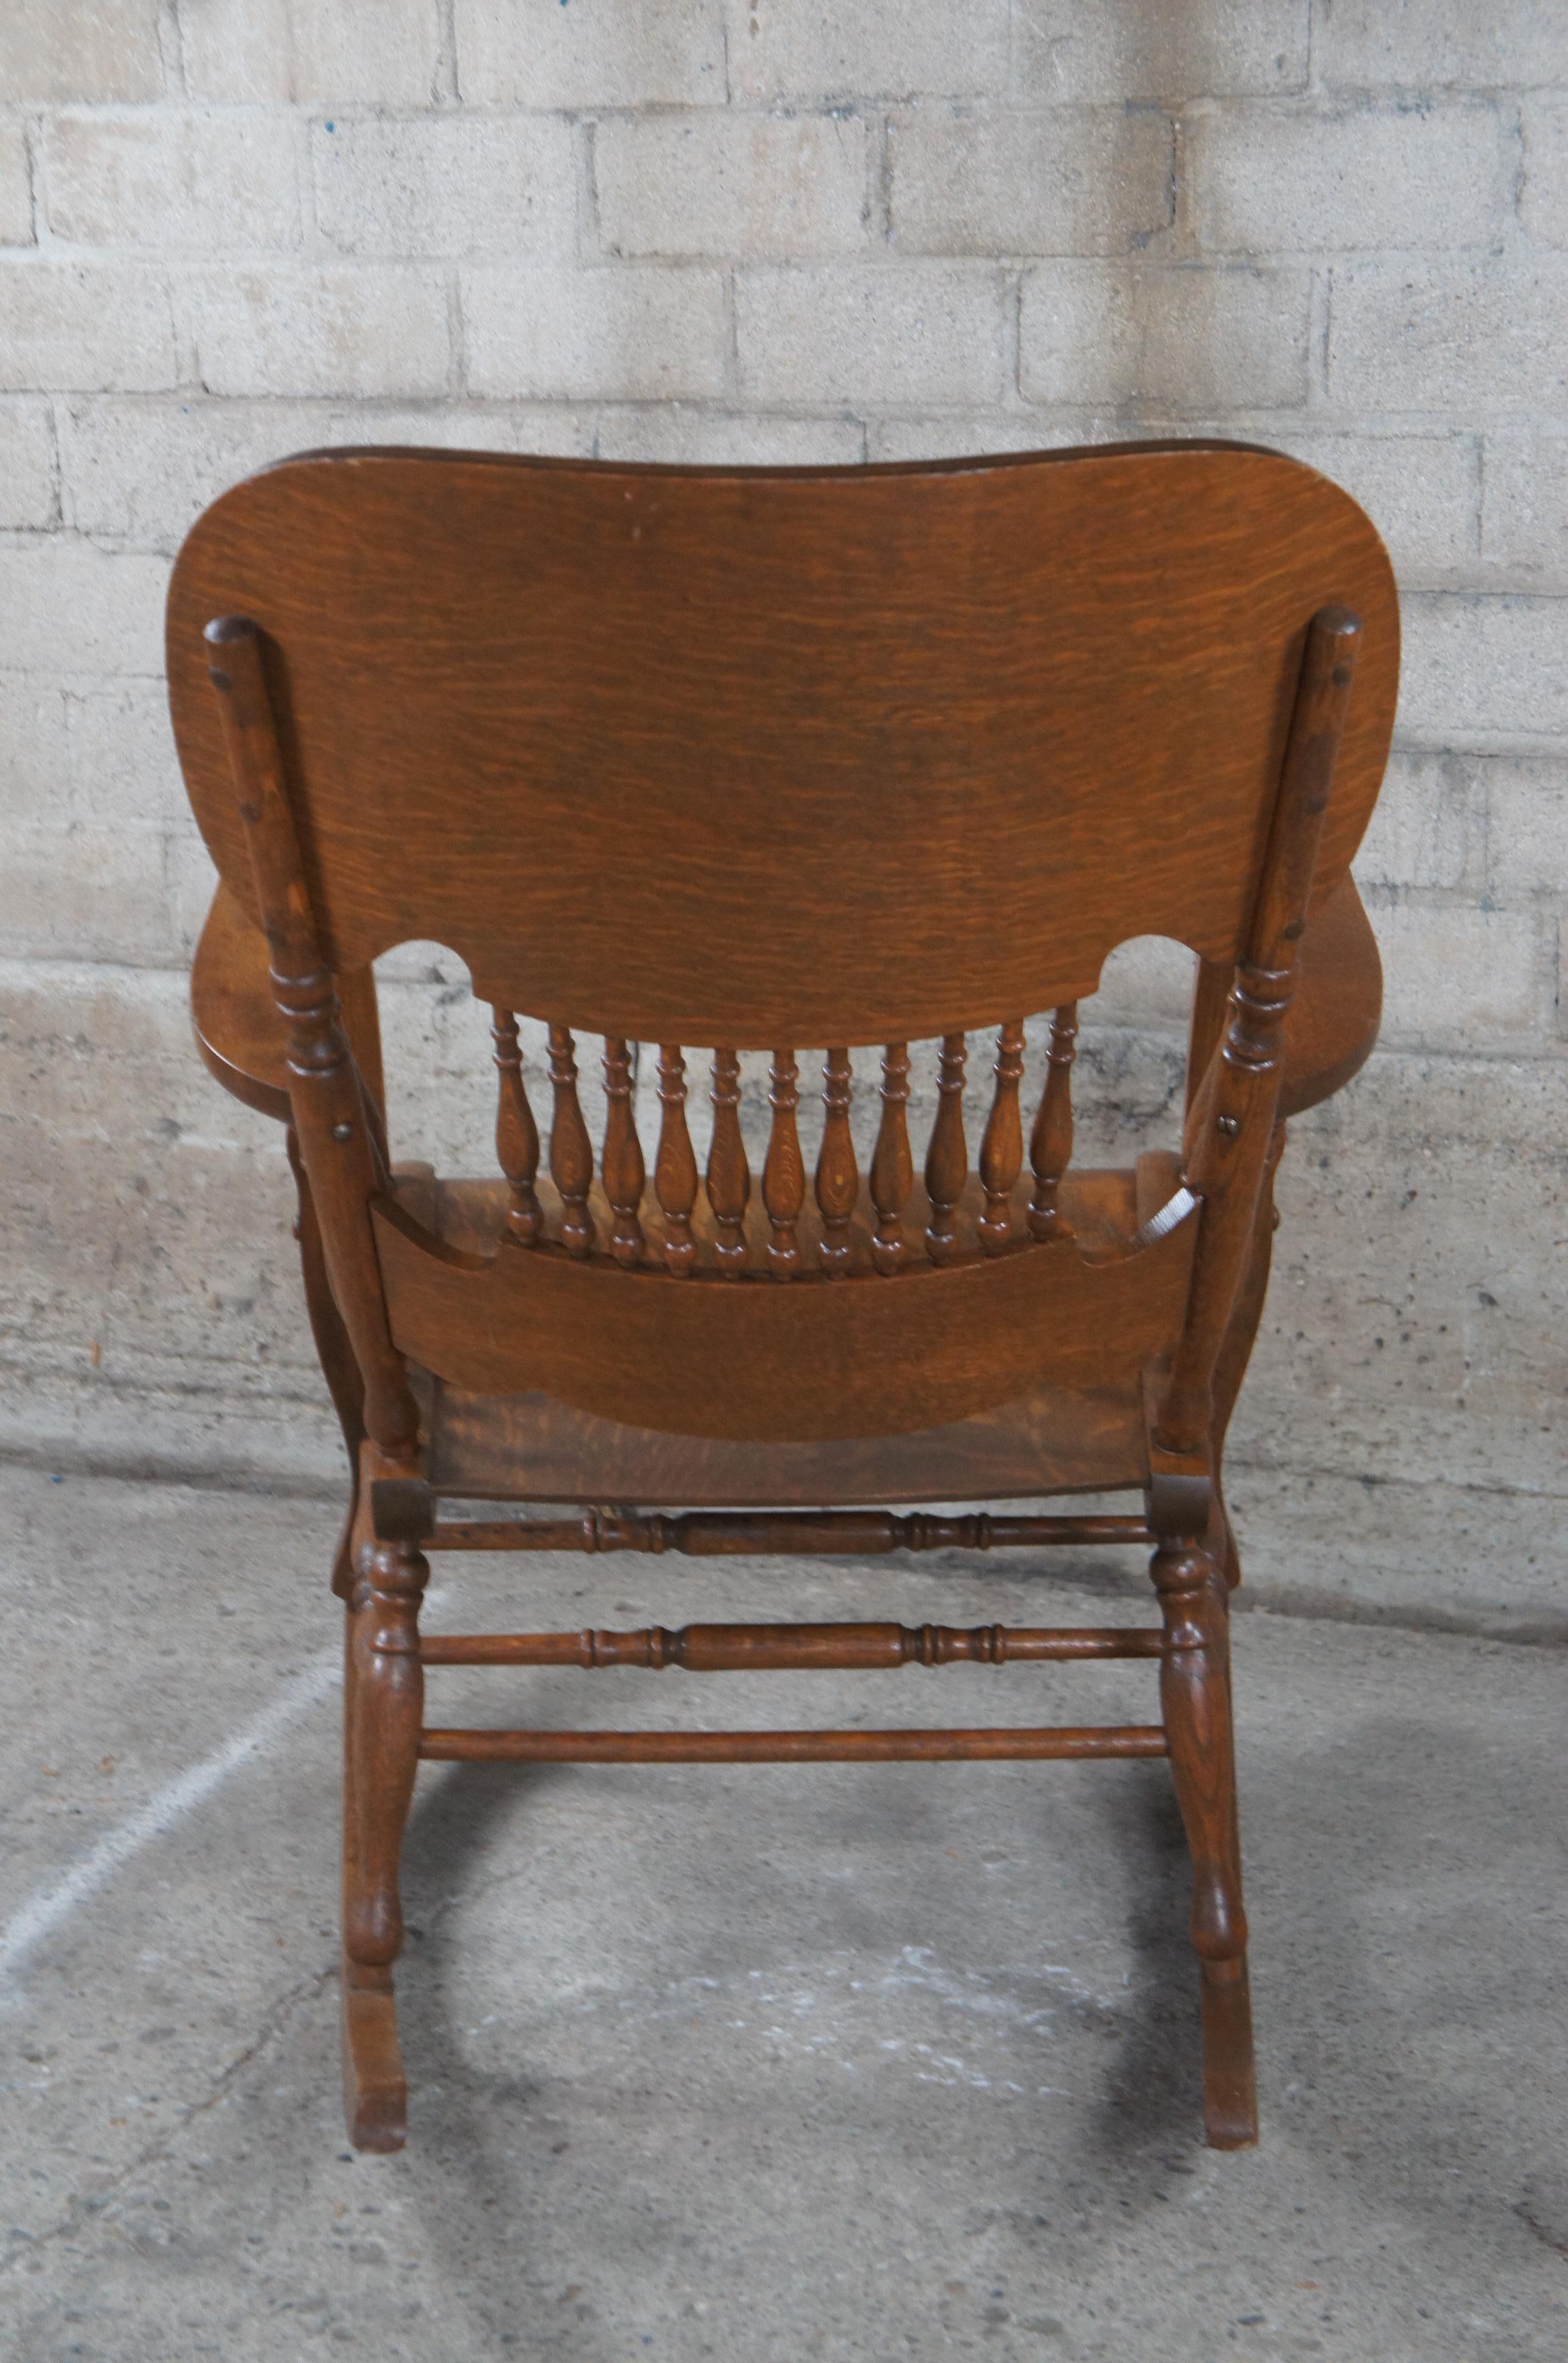 Antique Arts & Crafts Mission Quartersawn Oak Bentwood Rocking Arm Chair Rocker For Sale 4